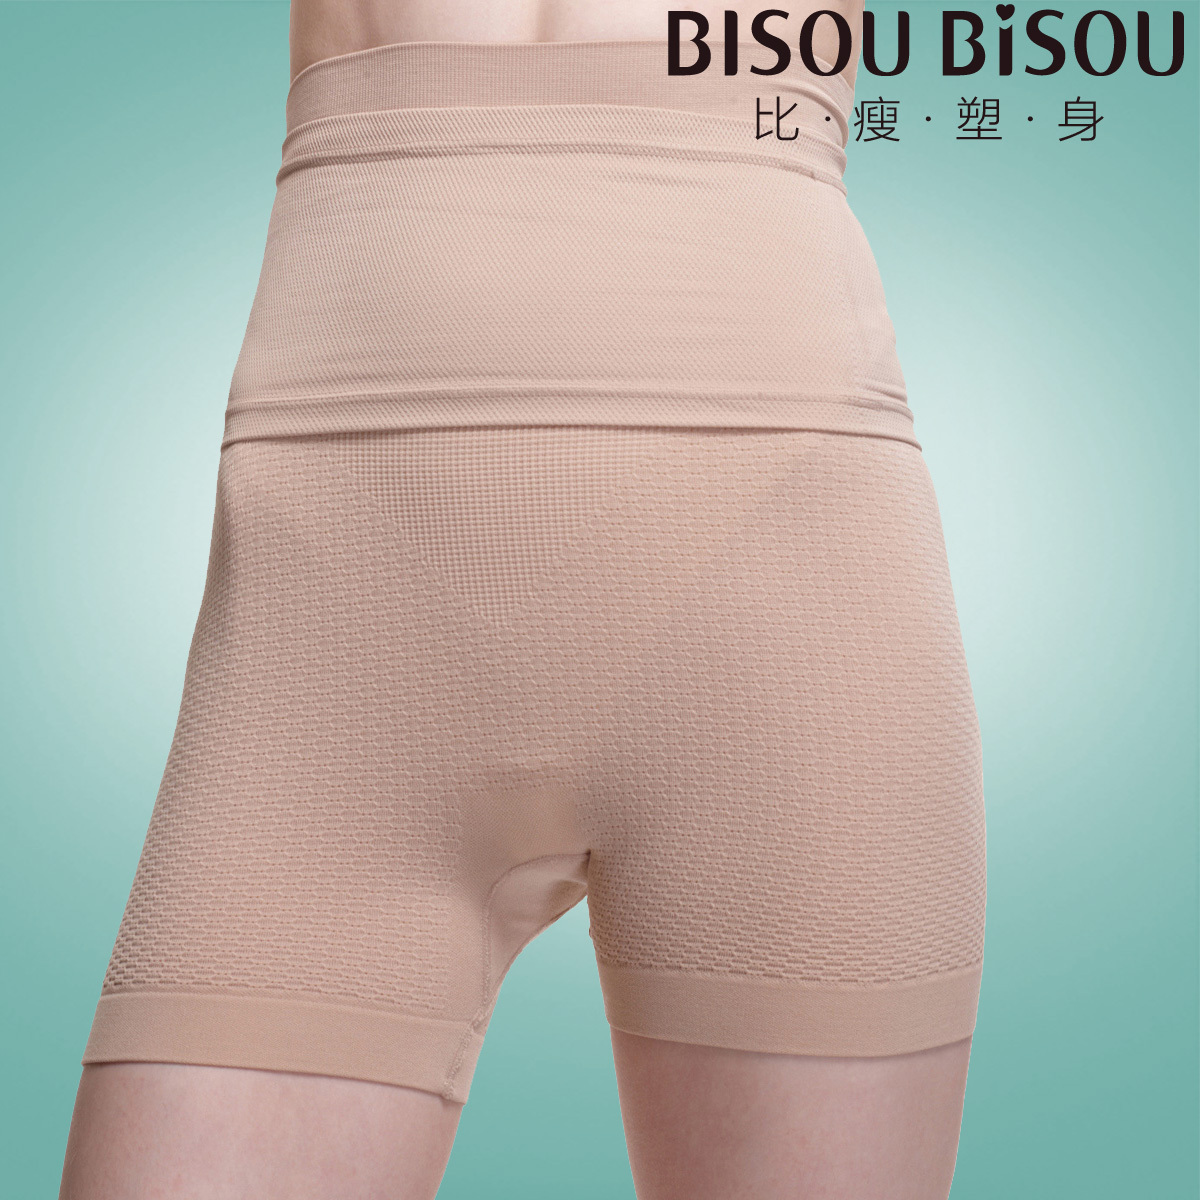 2012 Bisoubisou butt-lifting abdomen drawing thin waist body shaping pants cummerbund double layer pressure free shipping